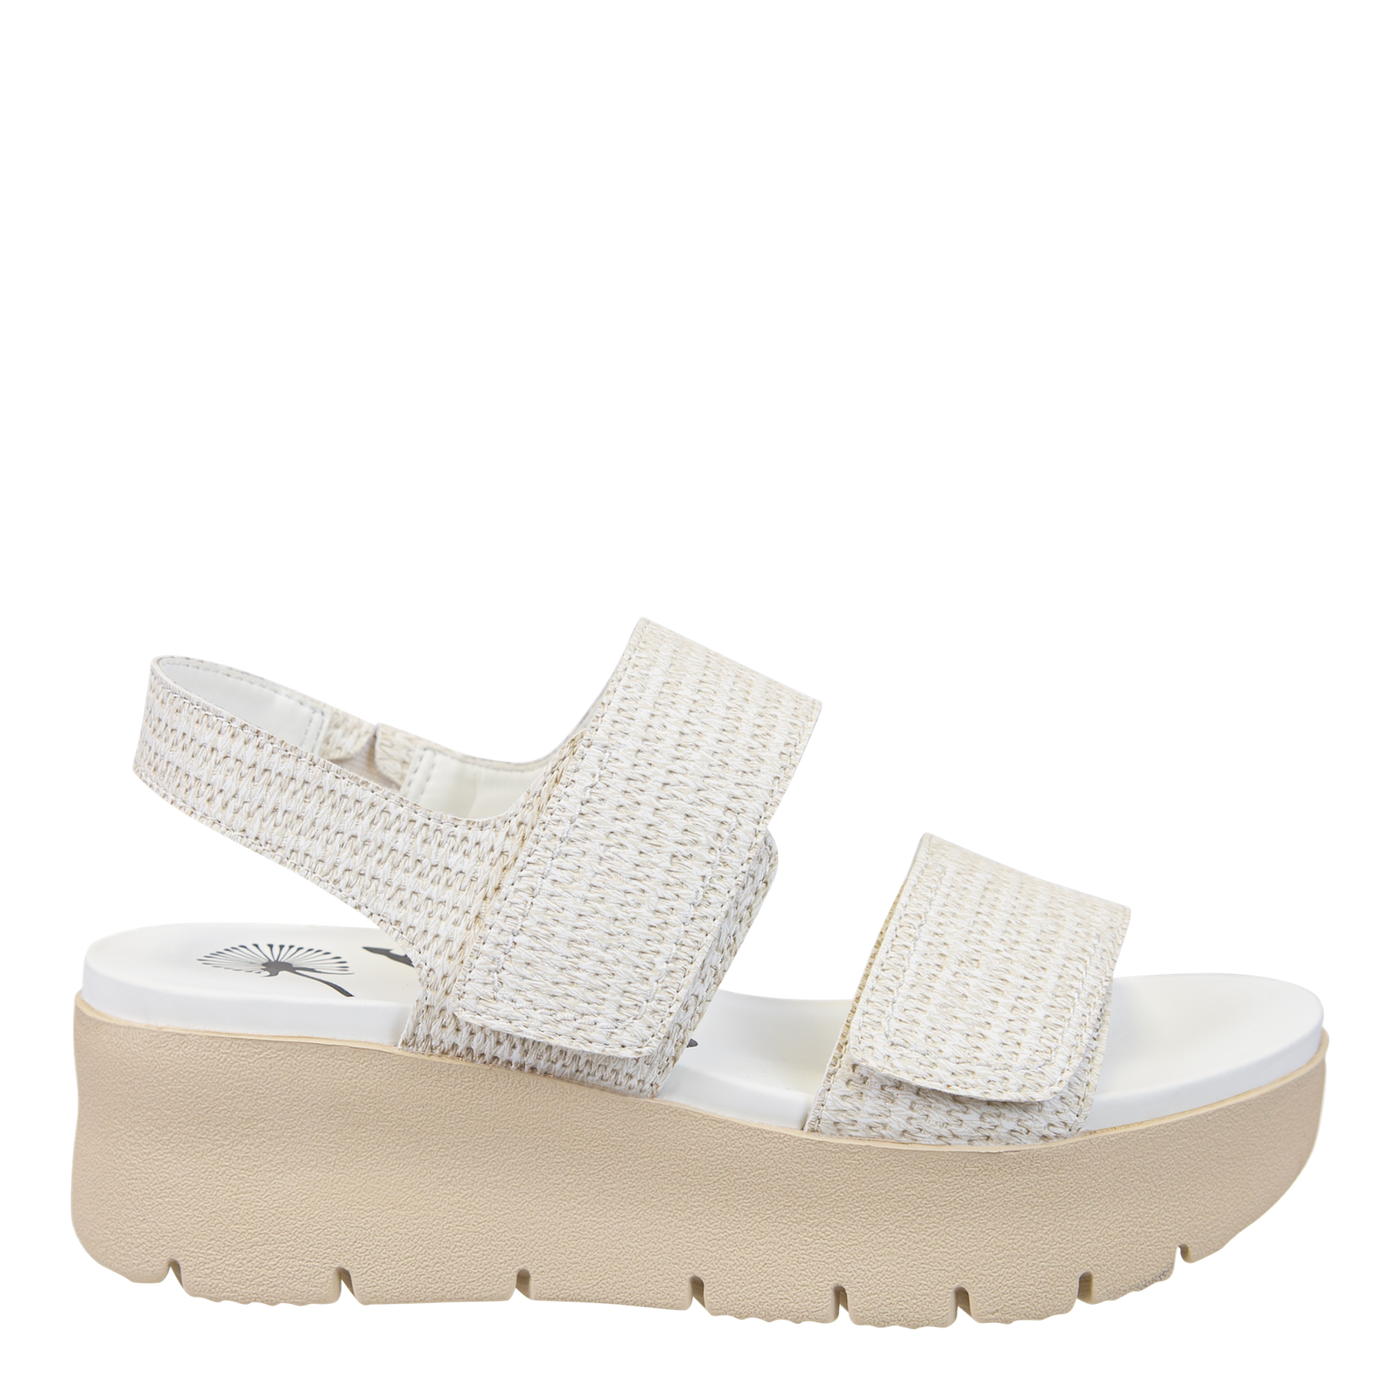 OTBT - MONTANE in RAFFIA Platform Sandals|Corner Stone Spa Boutique-WOMEN FOOTWEAR- Corner Stone Spa and Salon Boutique in Stoughton, Wisconsin